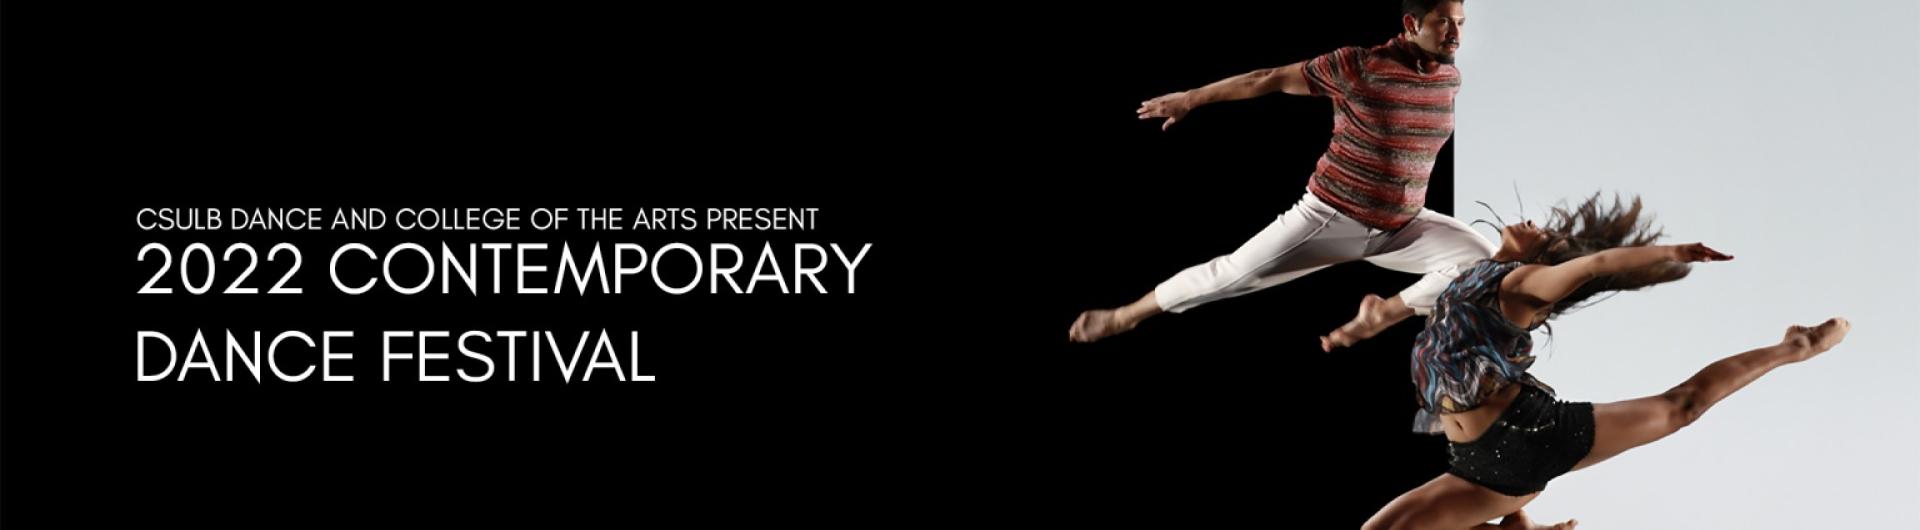 CSULB Dance and College of the Arts Present 2022 Contemporary Dance Festival